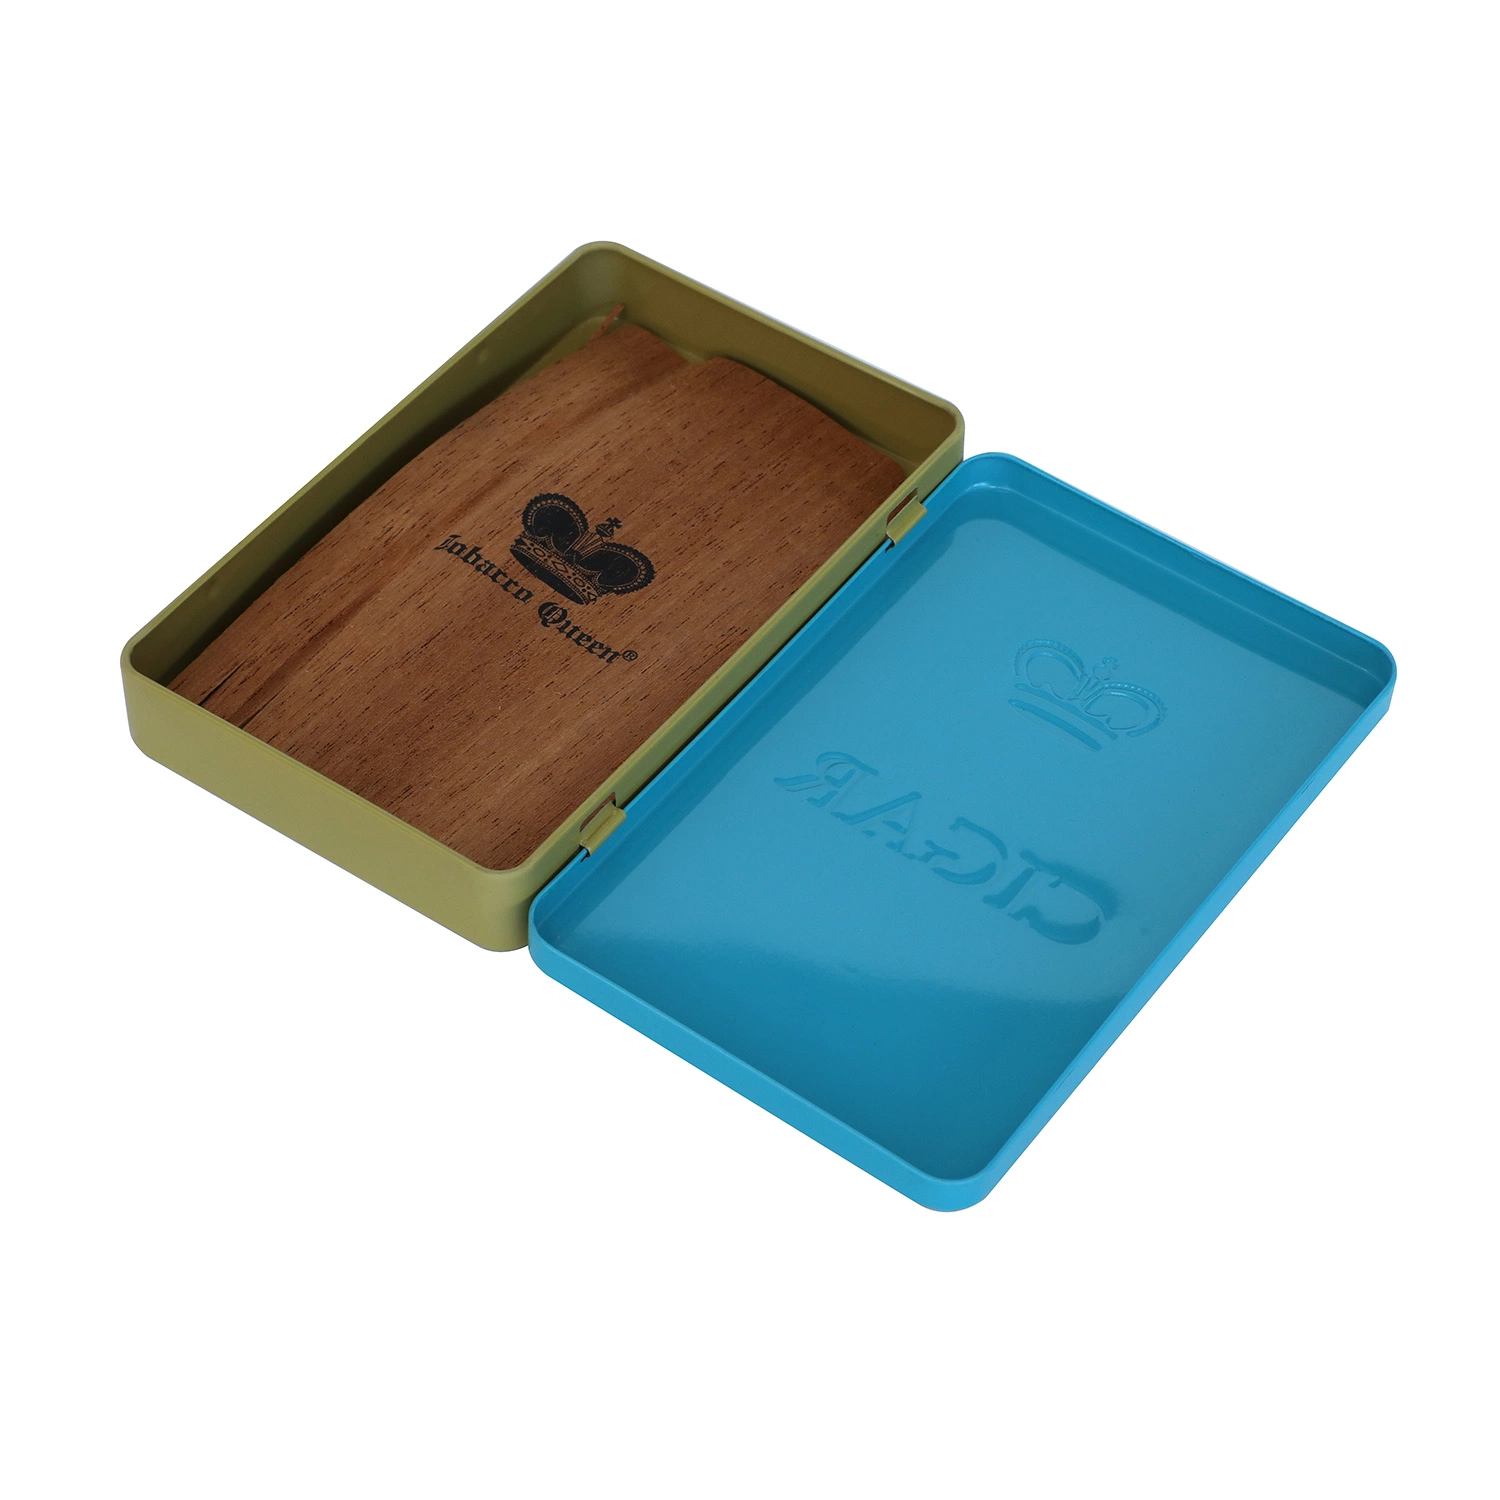 Rectangular Tin Cigarette Cases / Cigarette Packaging Tin Box / Hinged Metal Cigarette Box